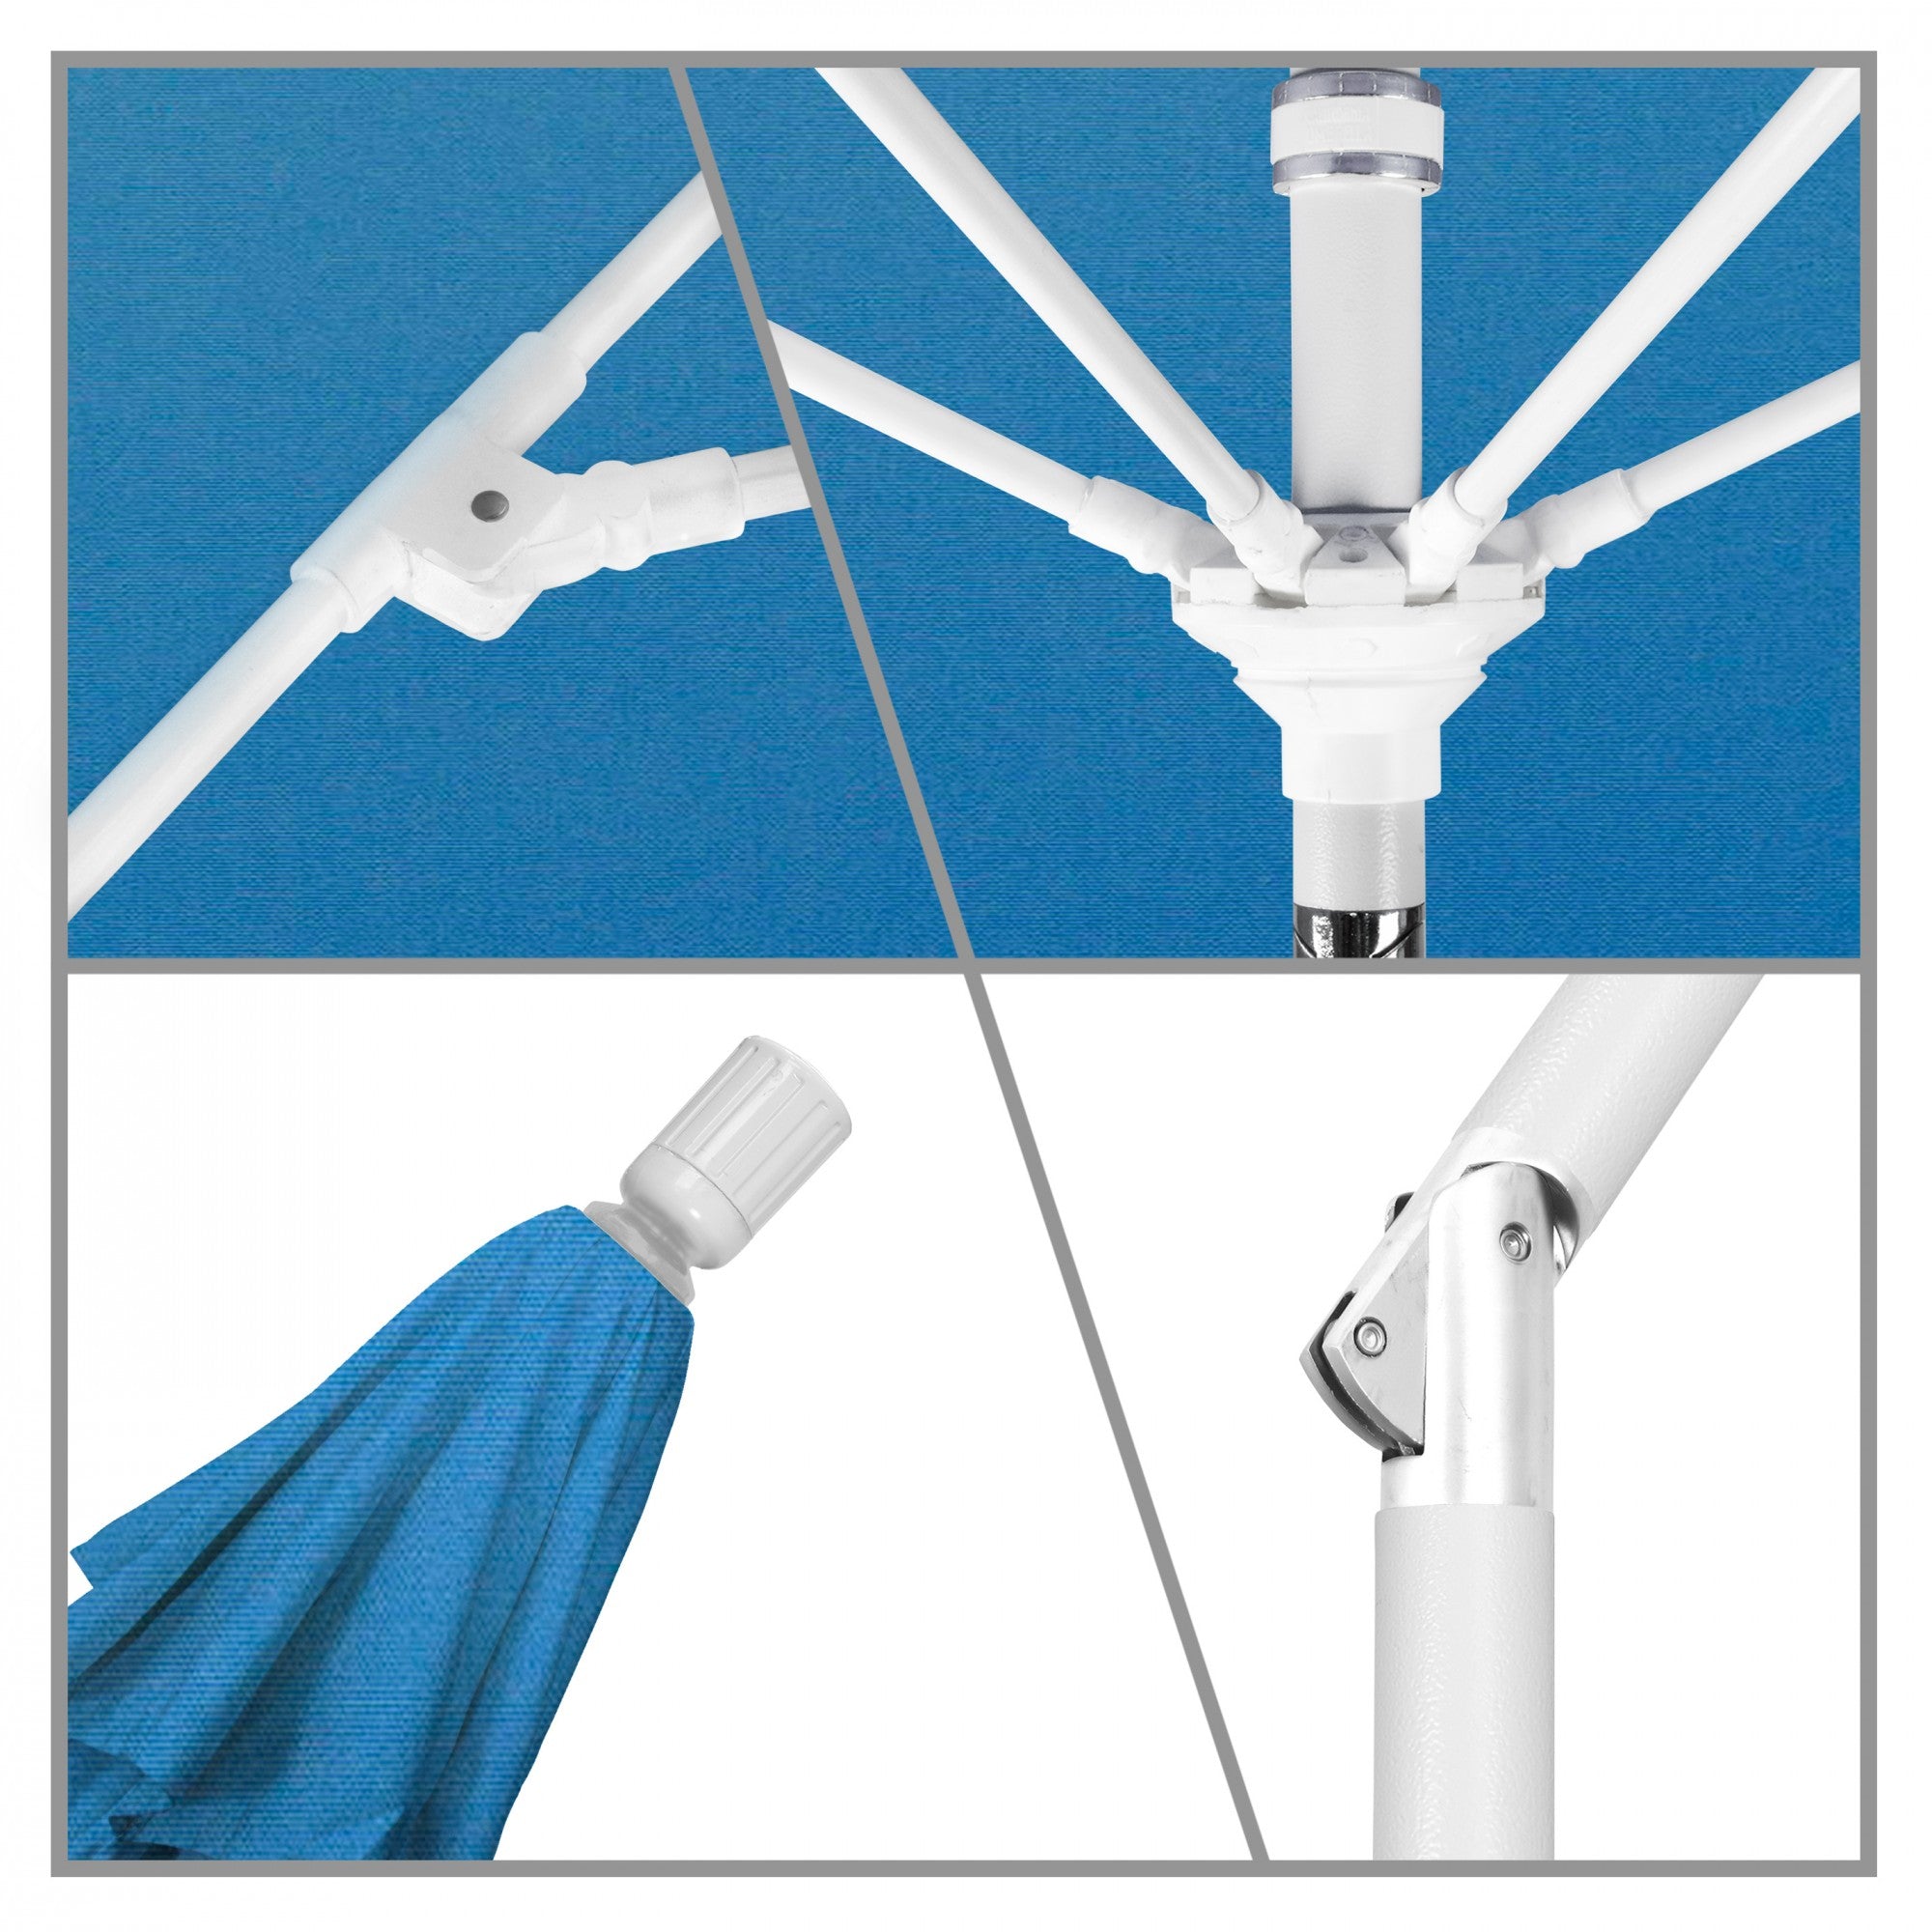 California Umbrella - 9' - Patio Umbrella Umbrella - Aluminum Pole - Capri - Pacifica - GSCUF908170-SA26